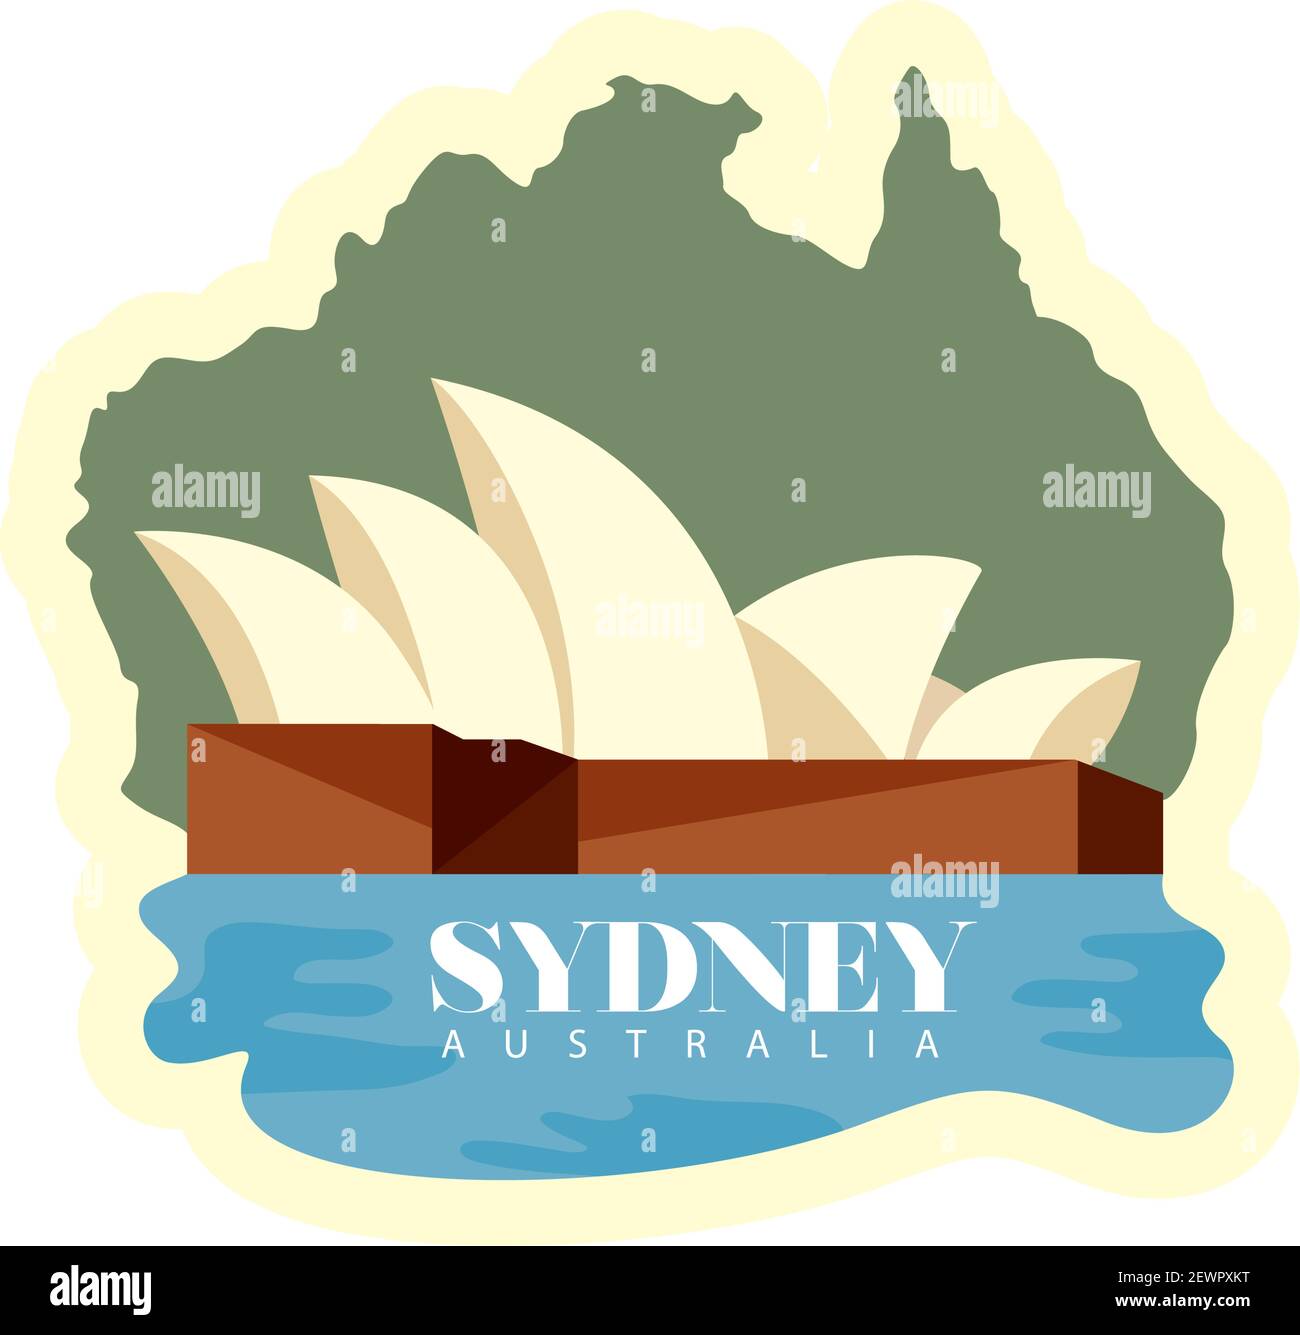 Sydney Opera House sticker icon Stock Vector